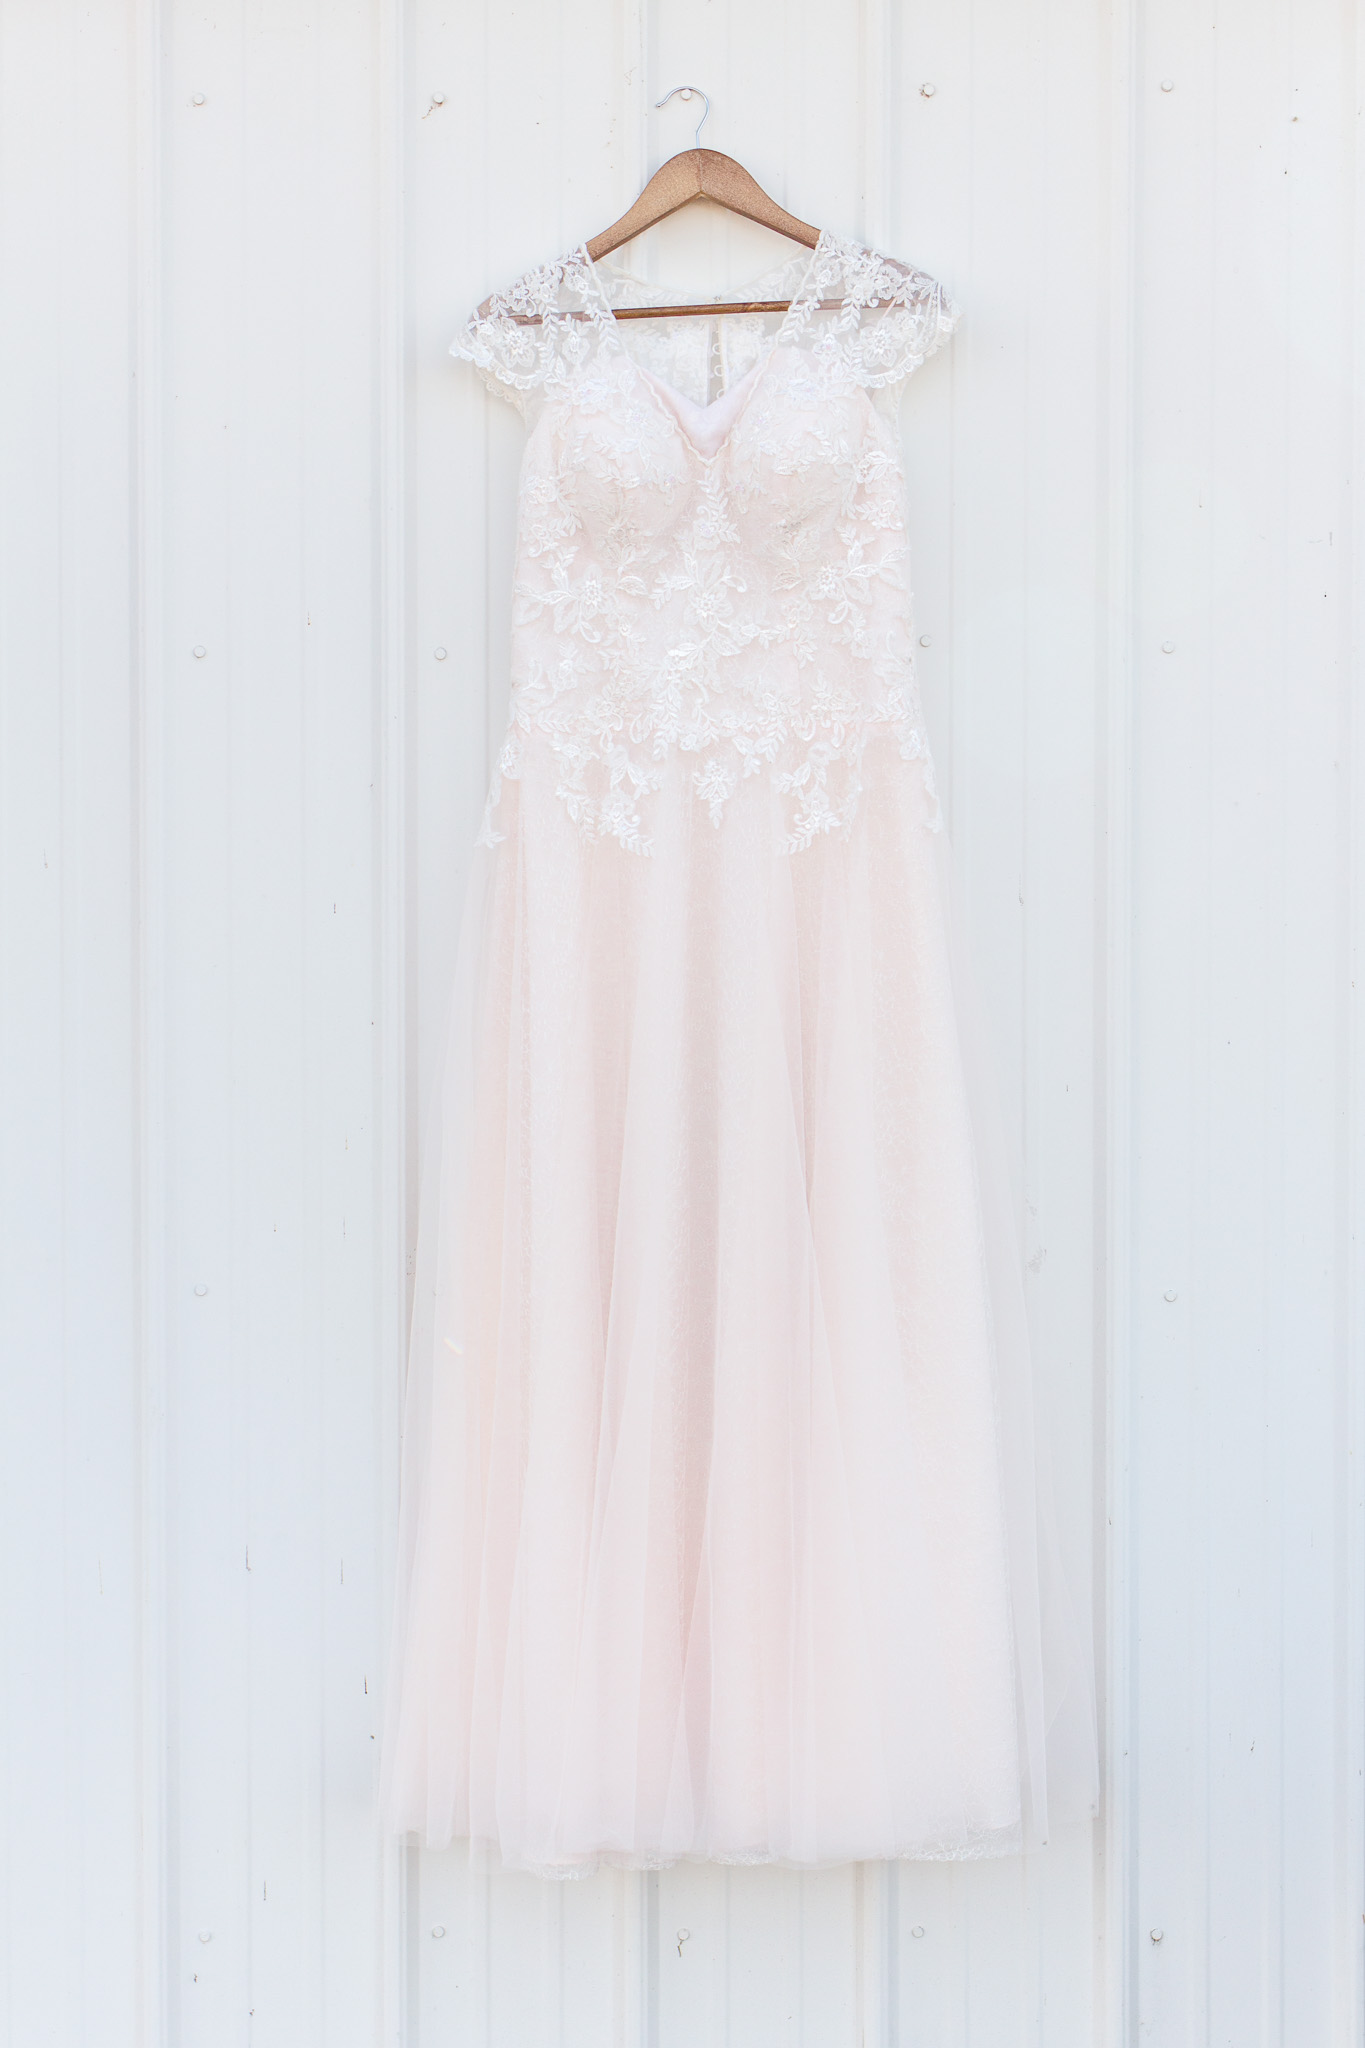 Beaded blush lace wedding dress